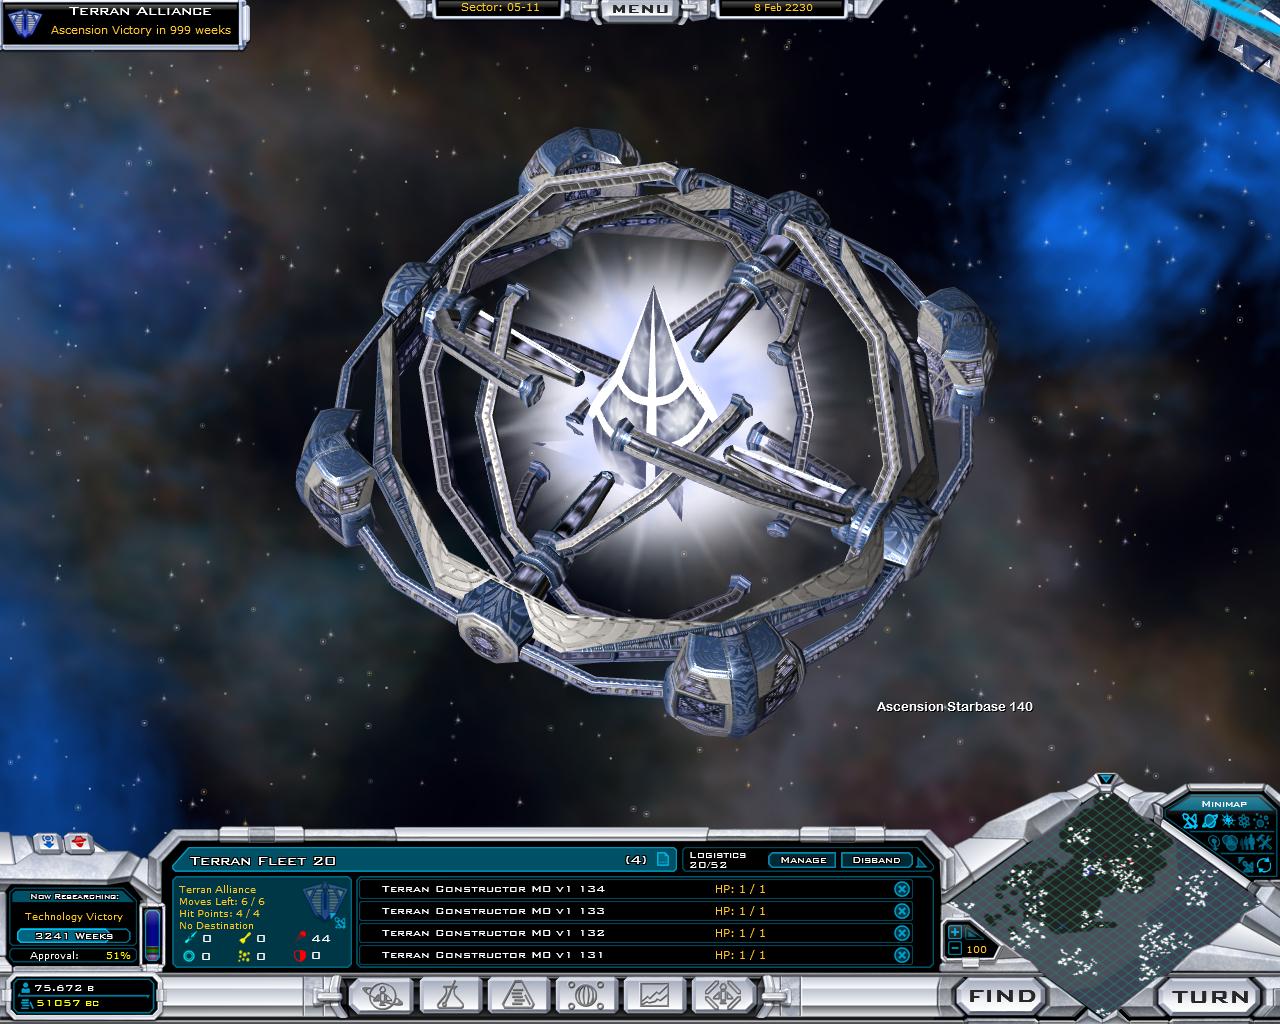 Galactic Civilizations II: Ultimate Edition screenshot